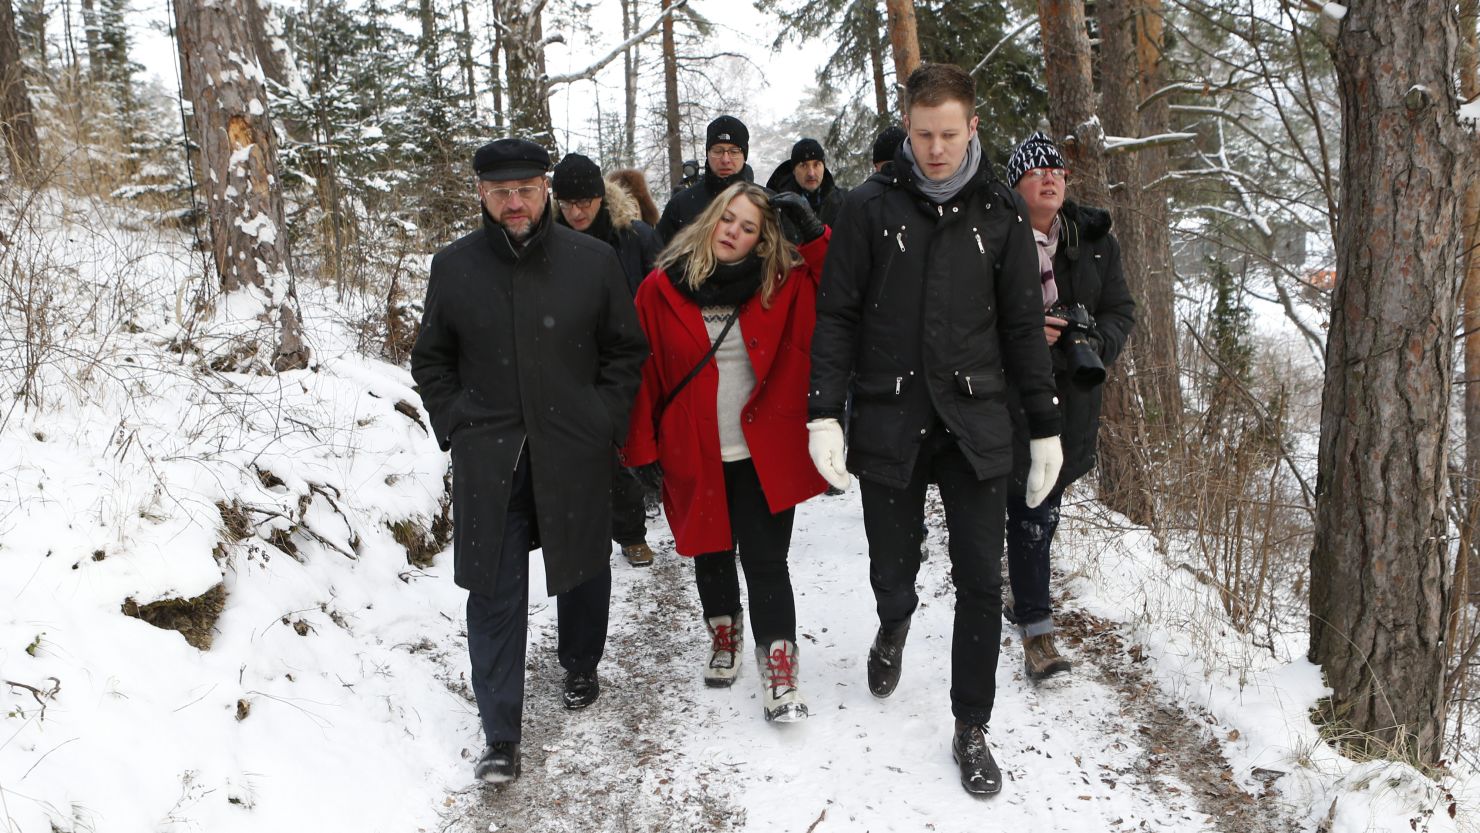 Martin Schulz (left) visits Utoya Island near Oslo, Norway, on December 11, 2012.